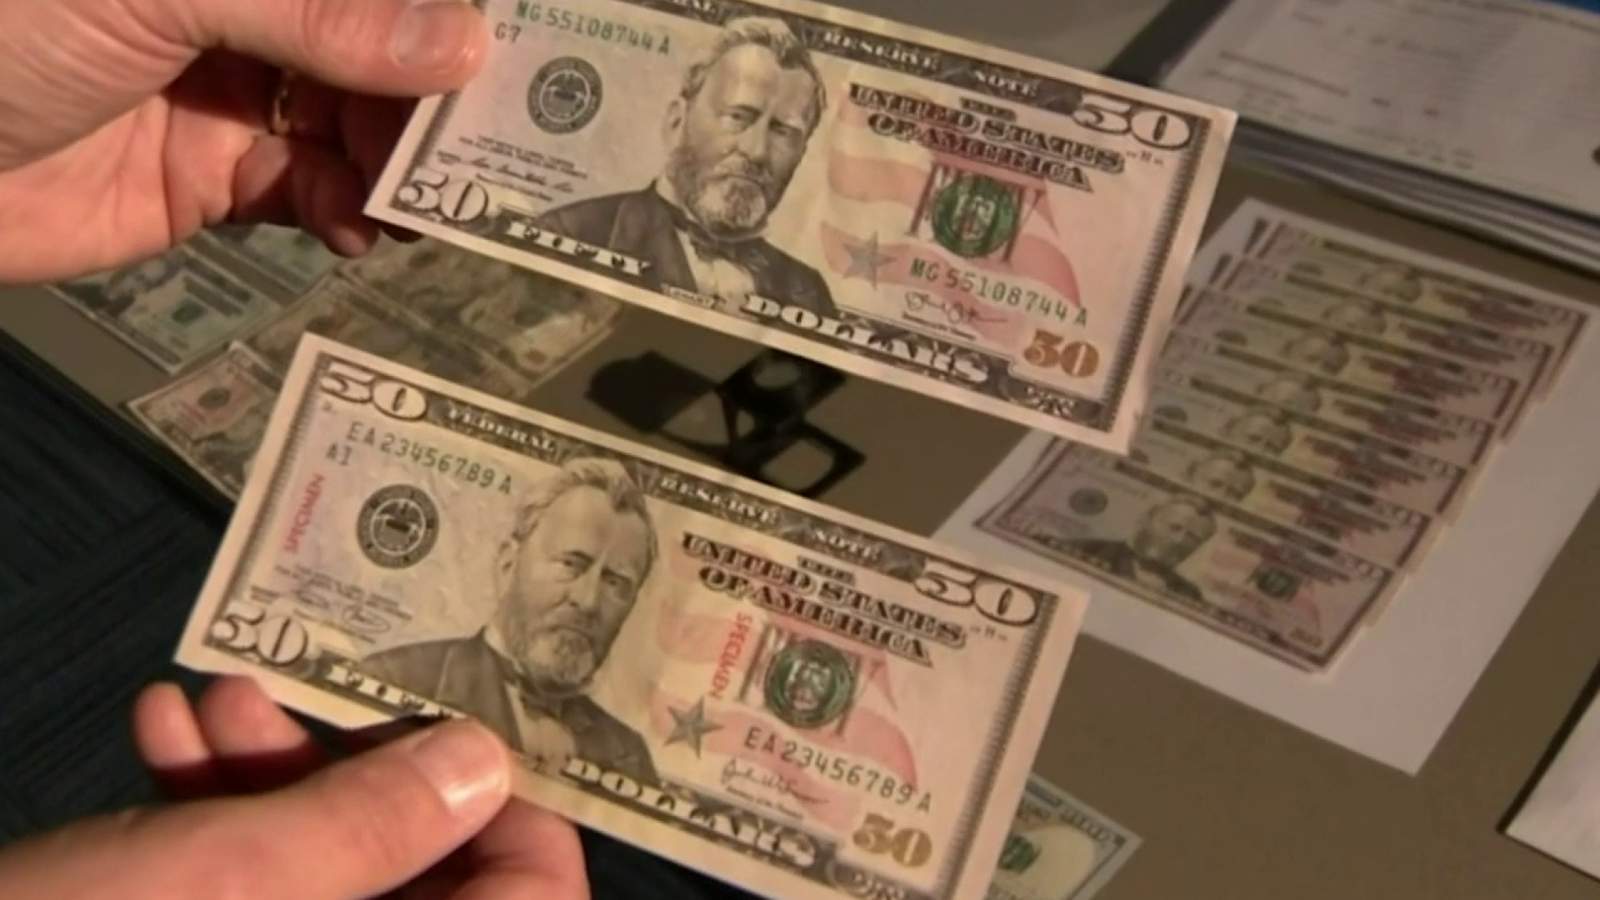 Michigan man accused of counterfeiting $100 bills